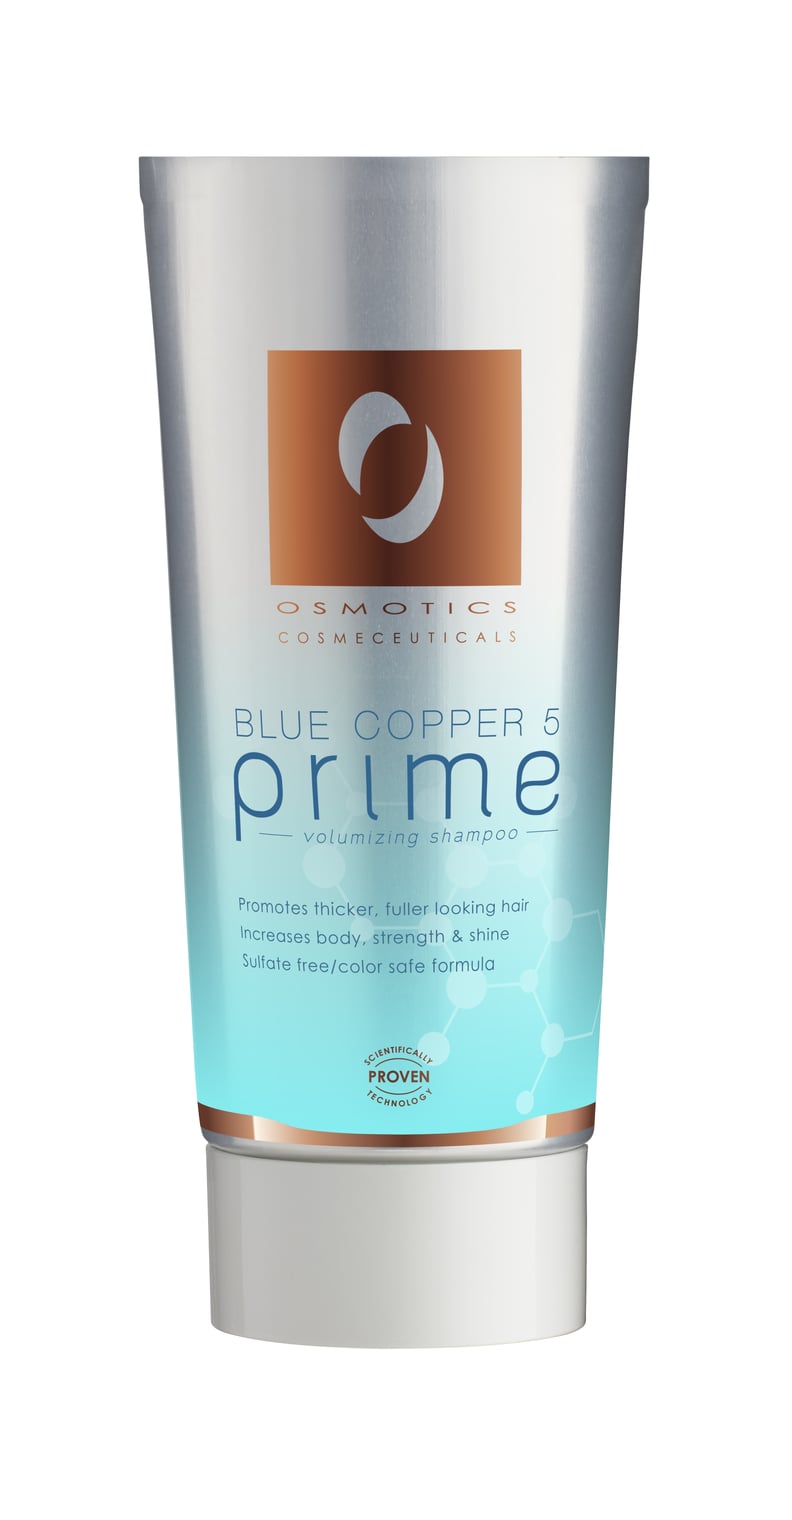 Osmotics Cosmeceuticals Blue Copper 5 Prime Volumizing Shampoo